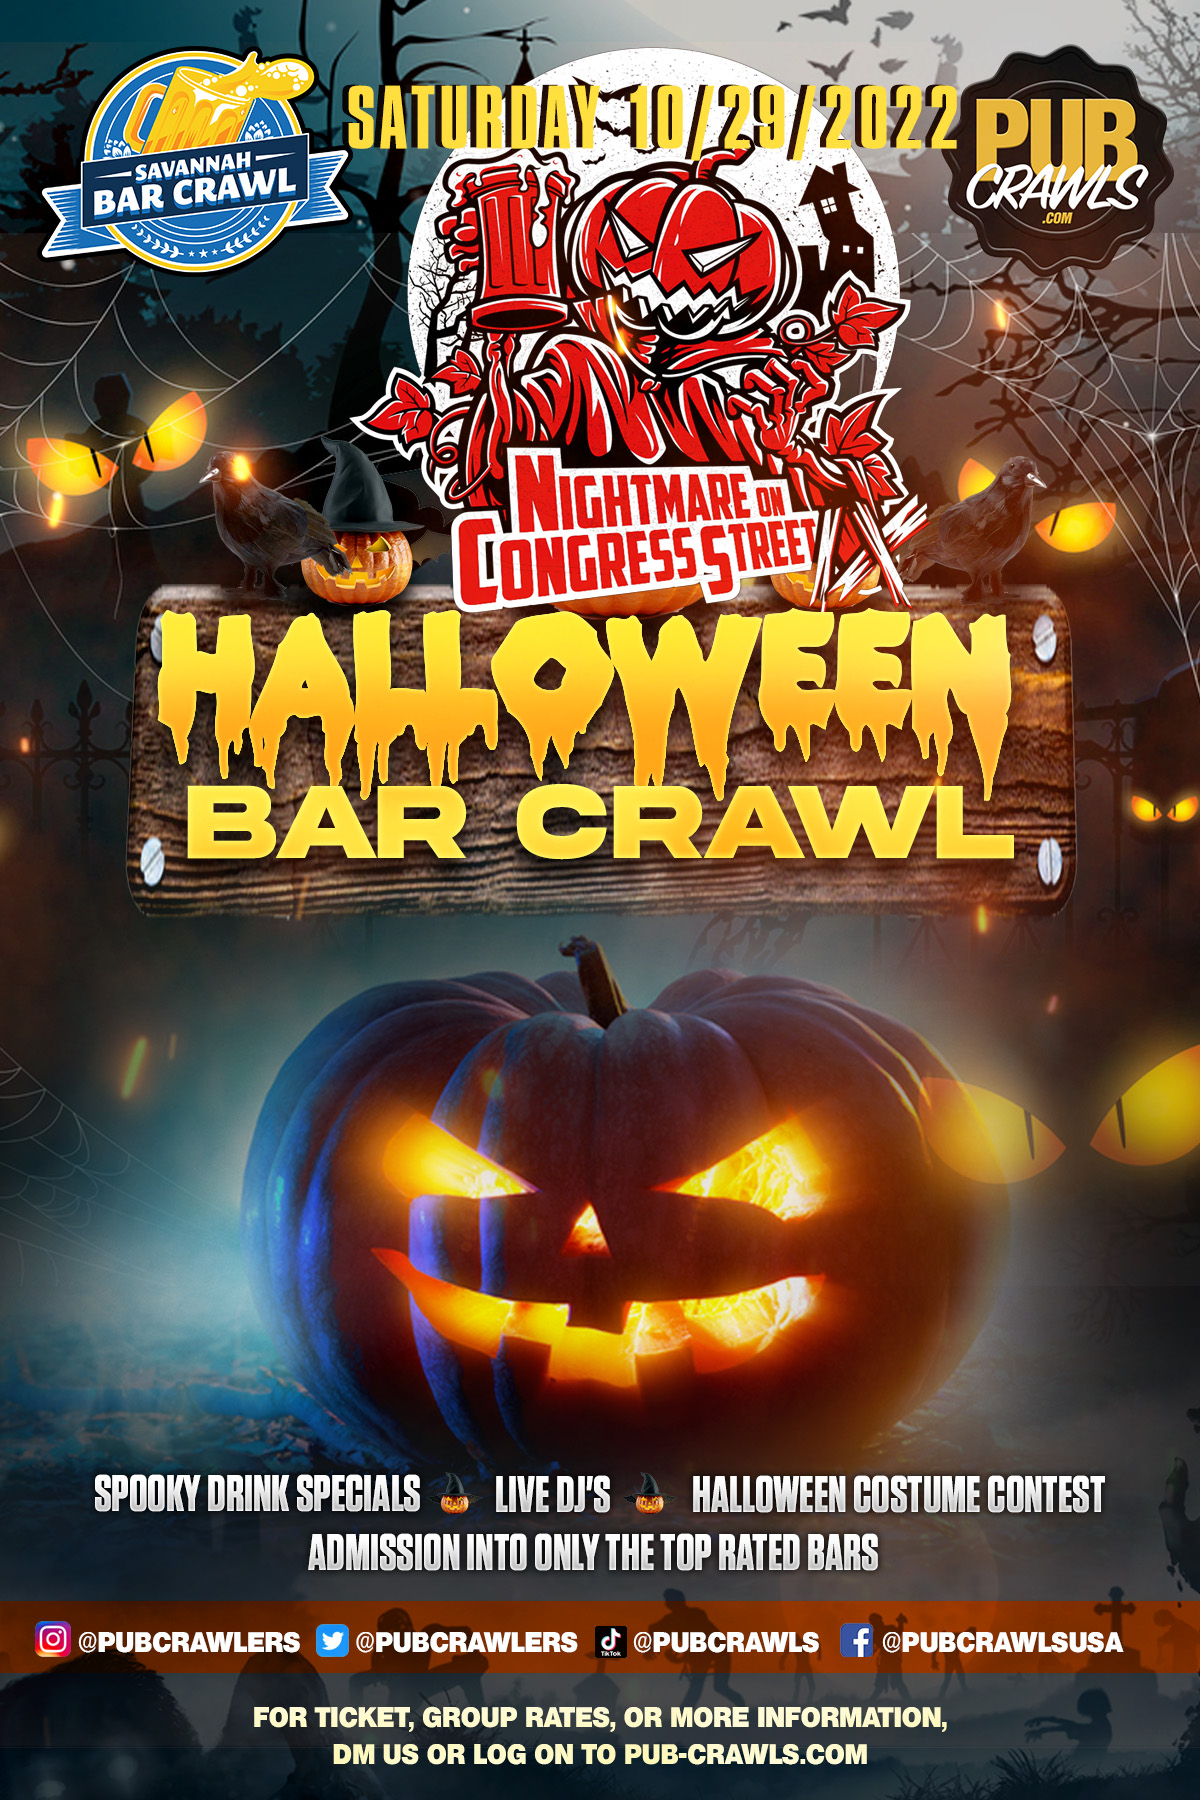 A Nightmare on Congress Street IX
Halloween Official Savannah Bar Crawl